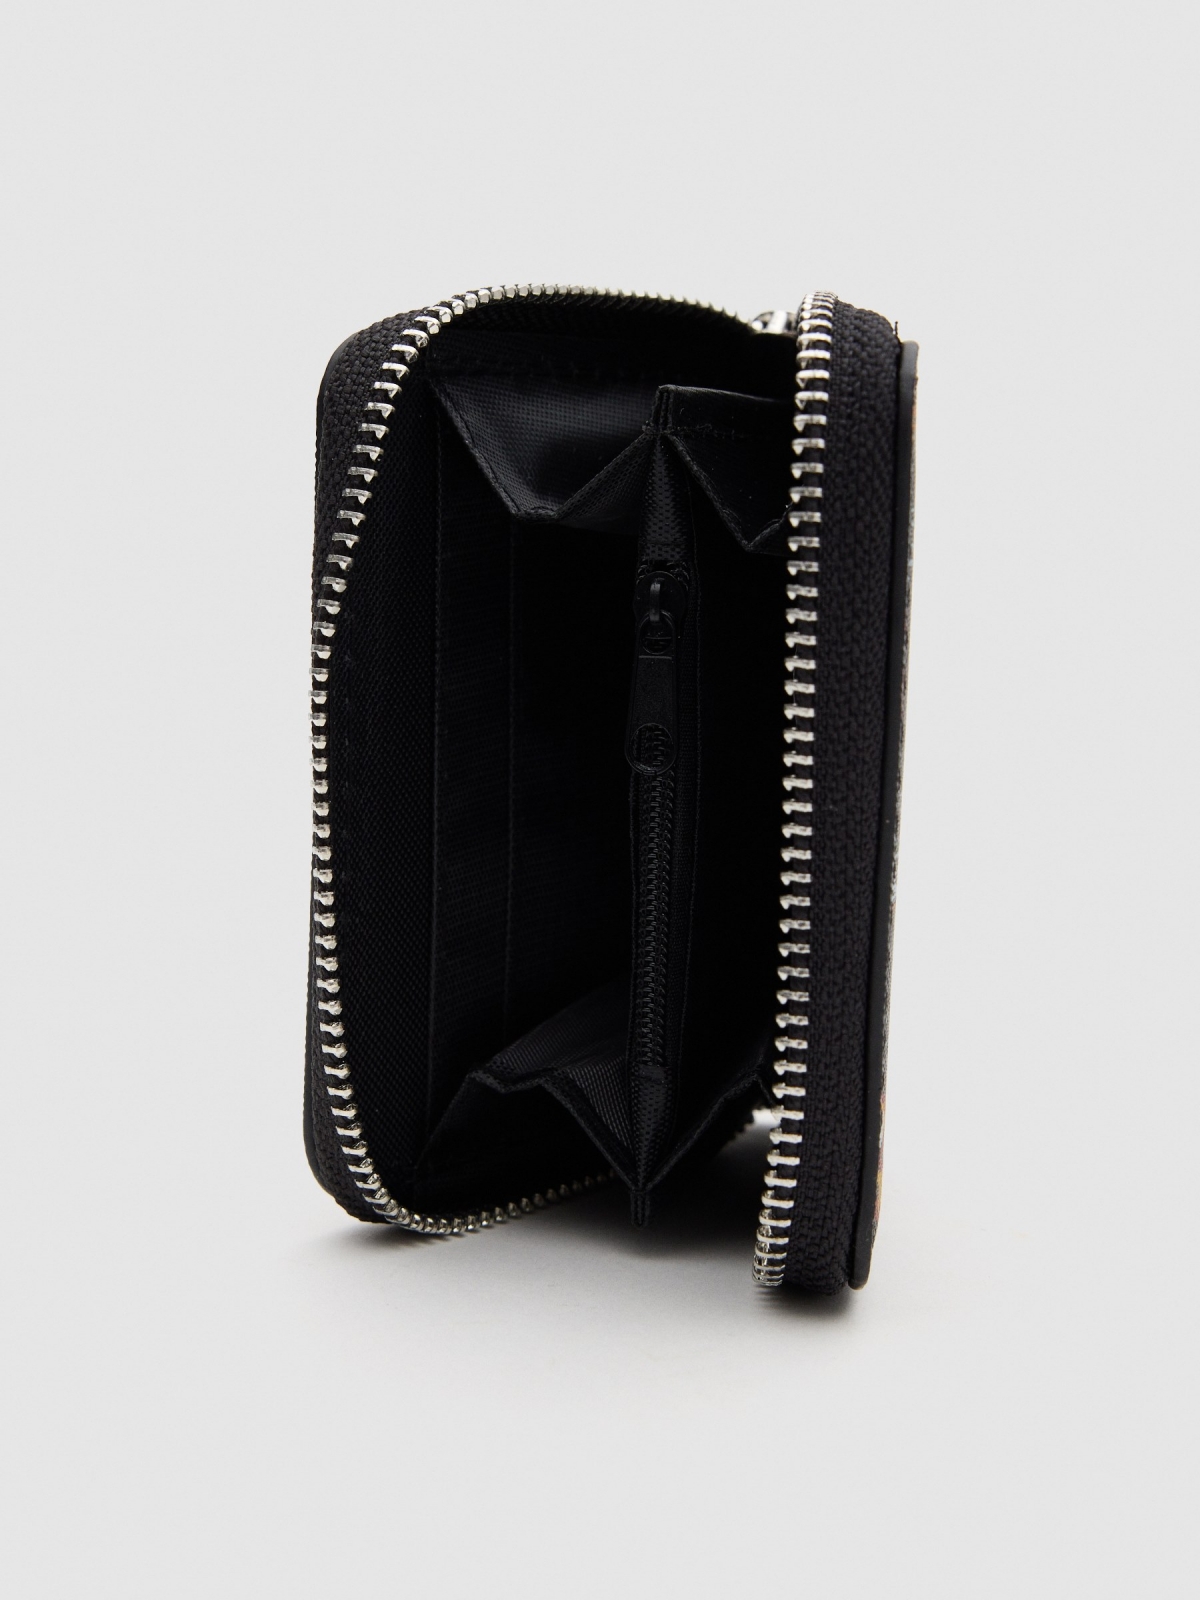 Tropical purse black/beige detail view